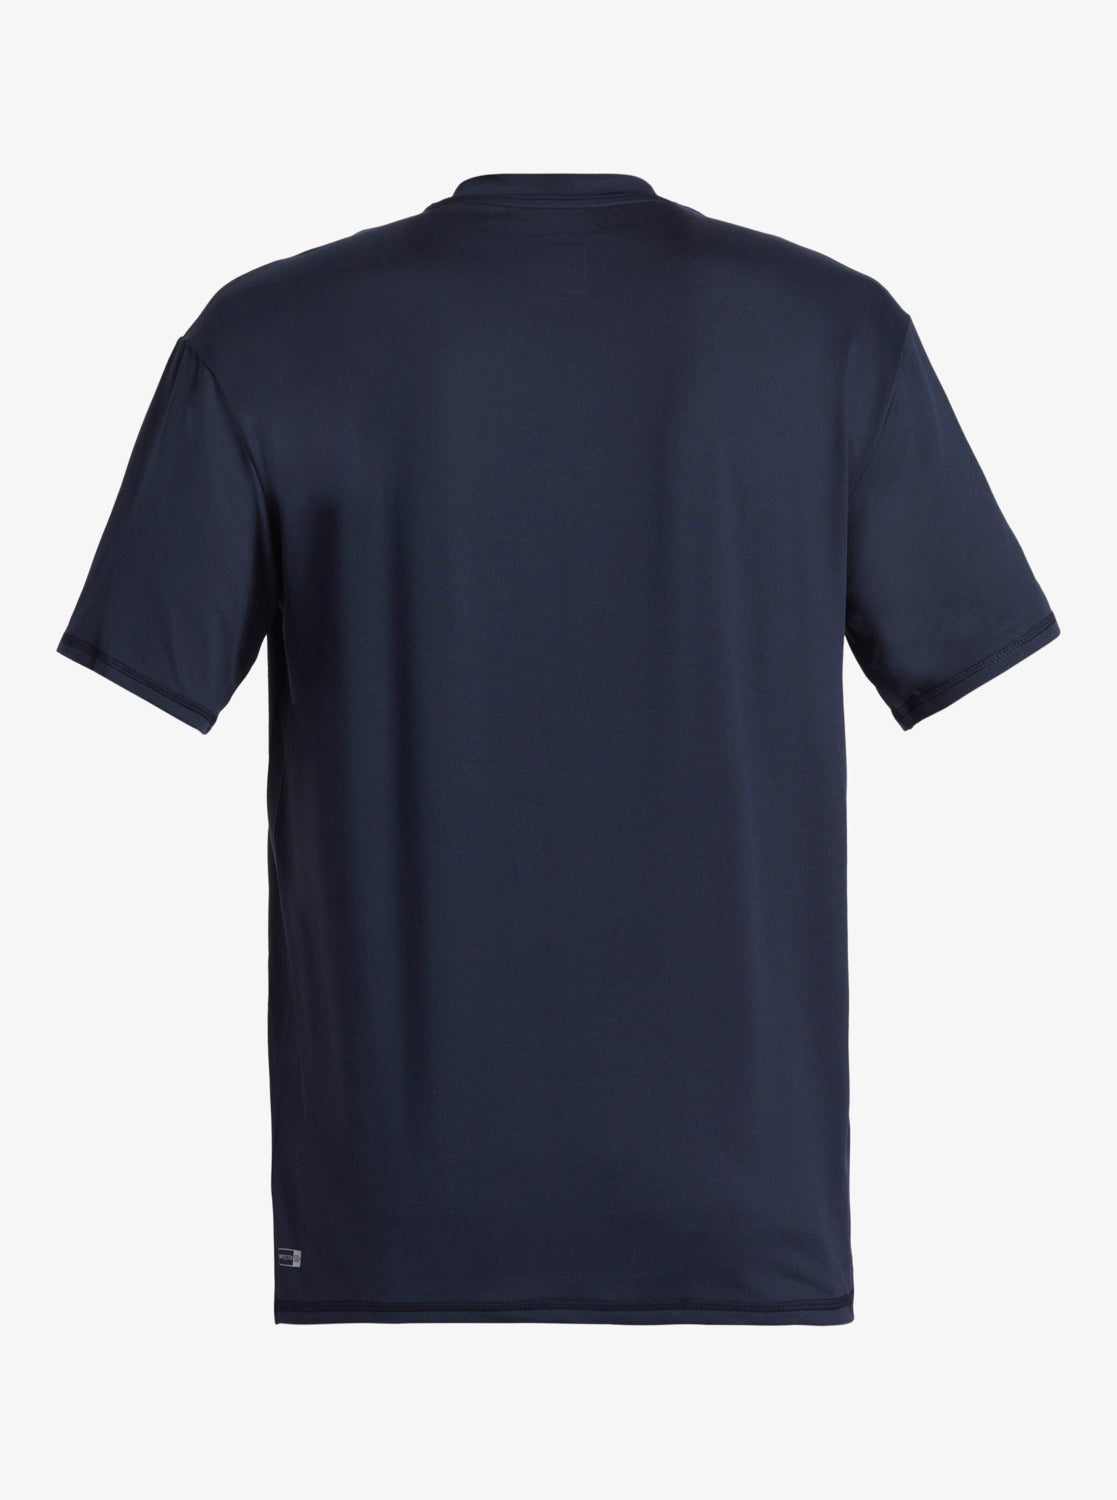 Quiksilver Everyday Surf Short Sleeve UPF 50 Surf T-Shirt in Navy Blazer